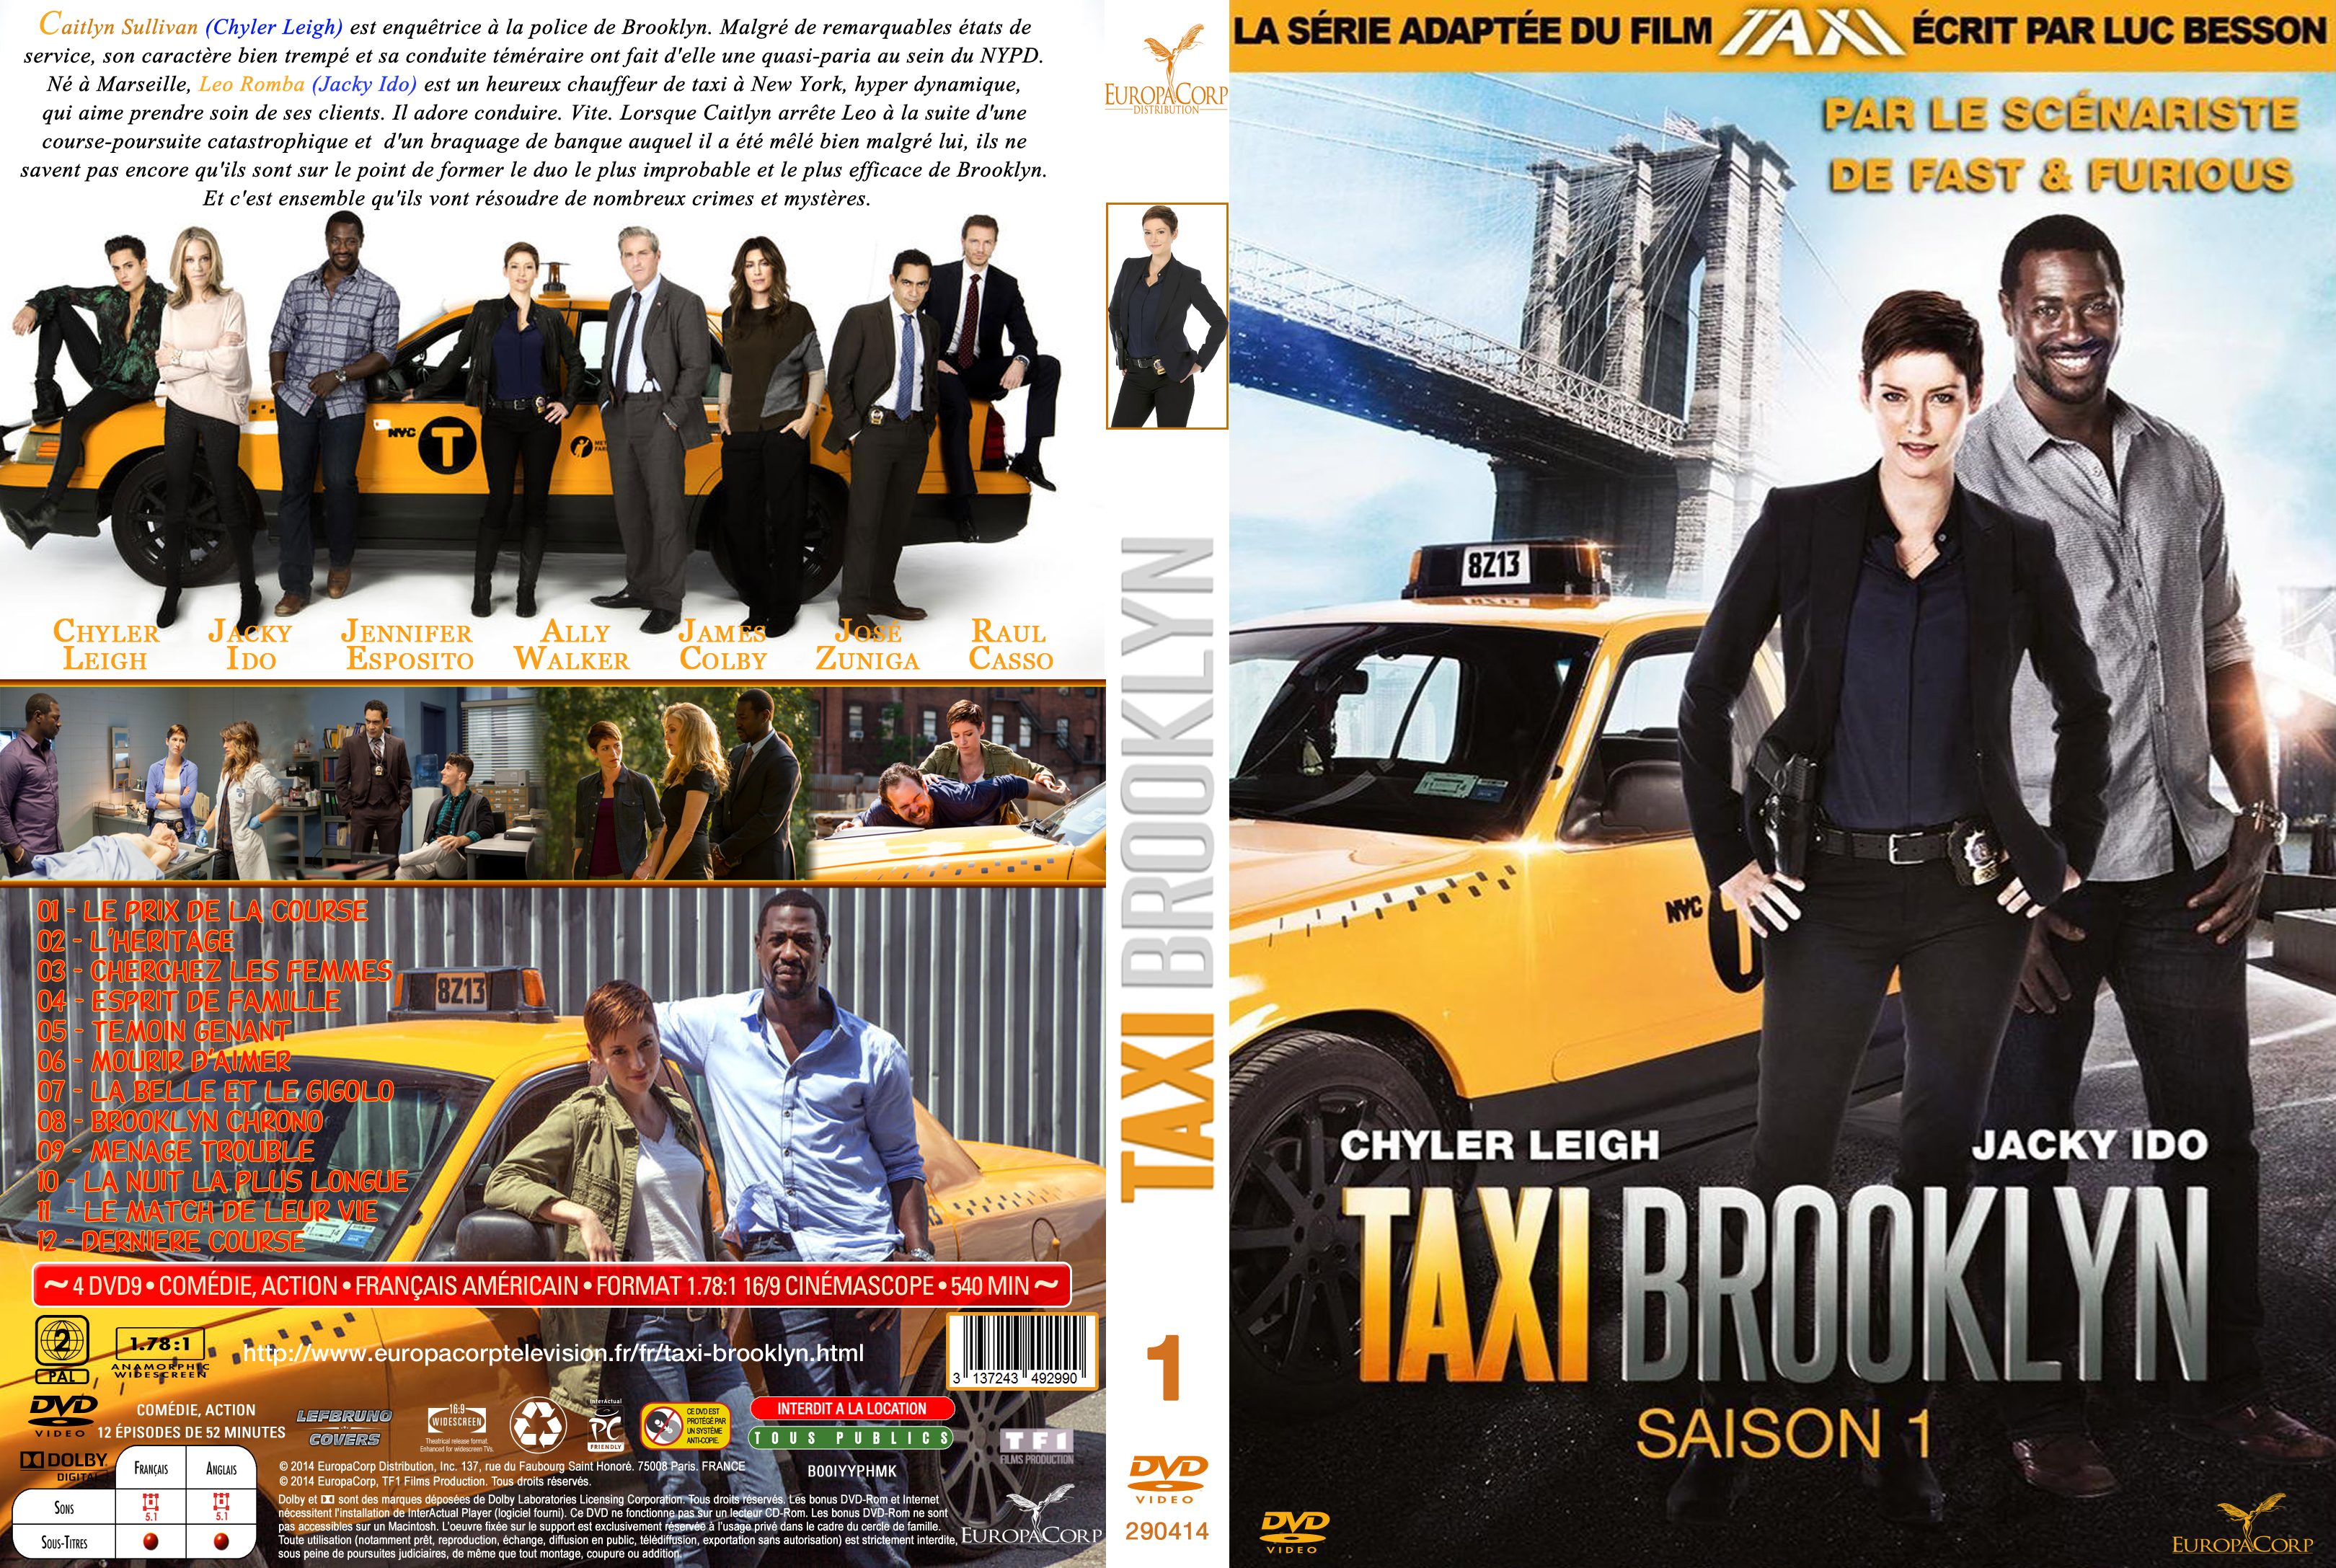 Jaquette DVD Taxi Brooklyn Saison 1 custom